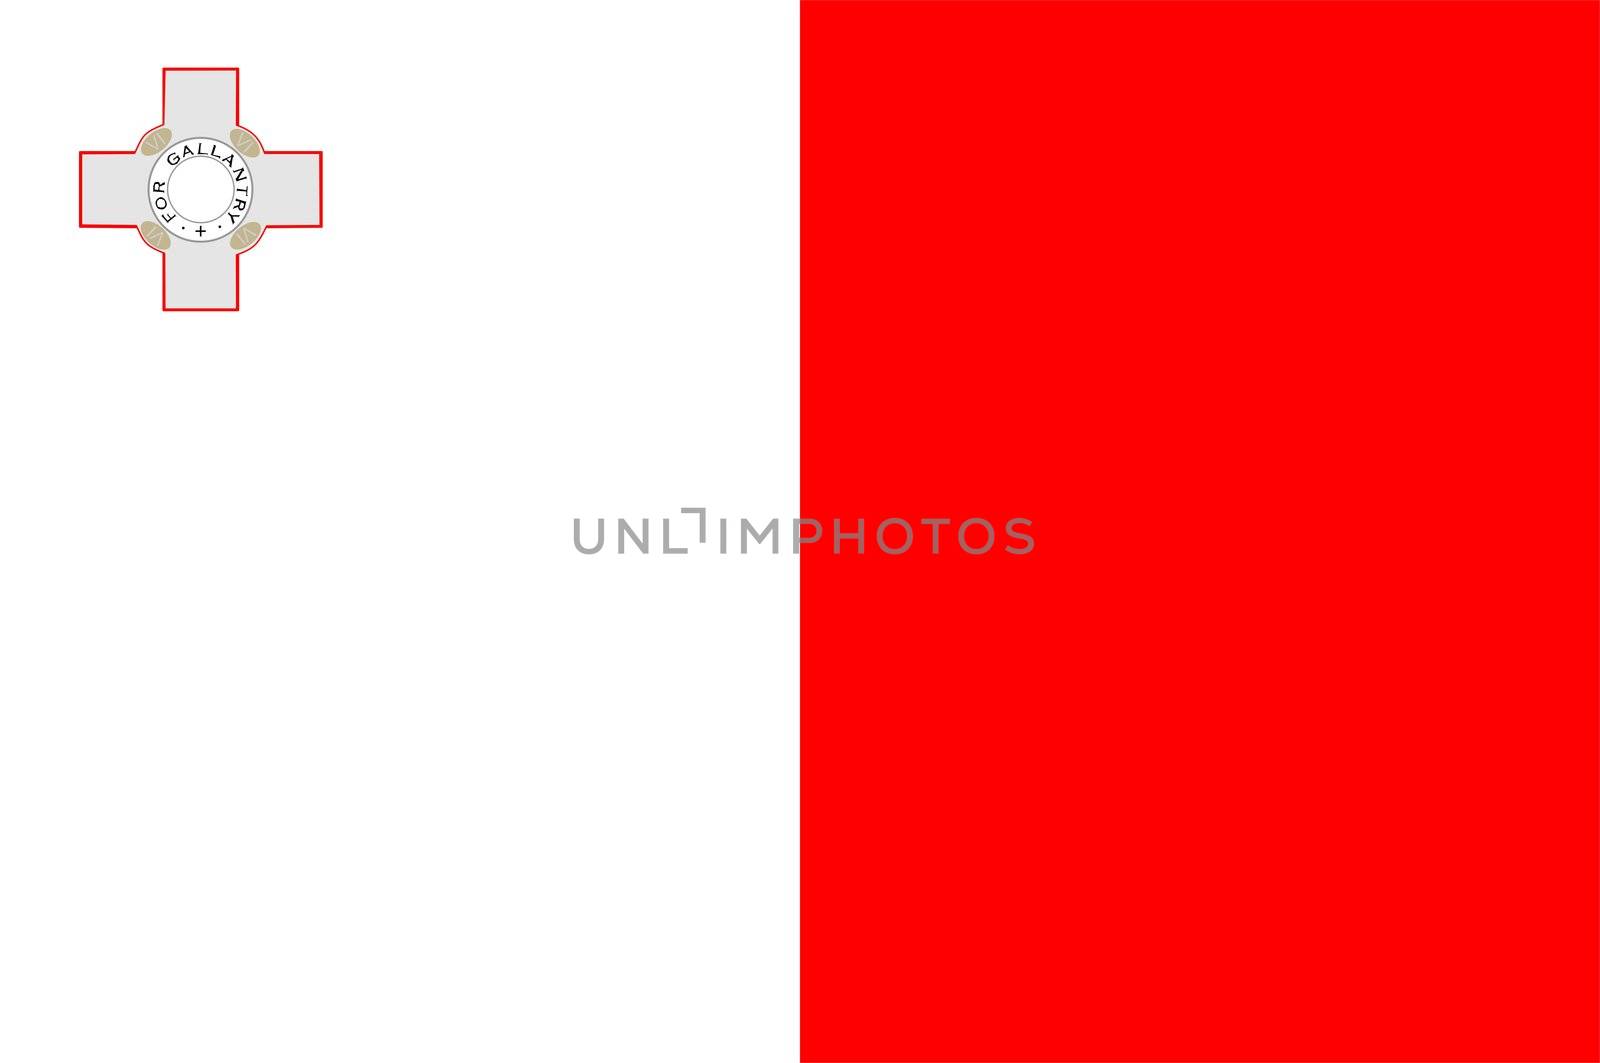 Malta Flag by tony4urban